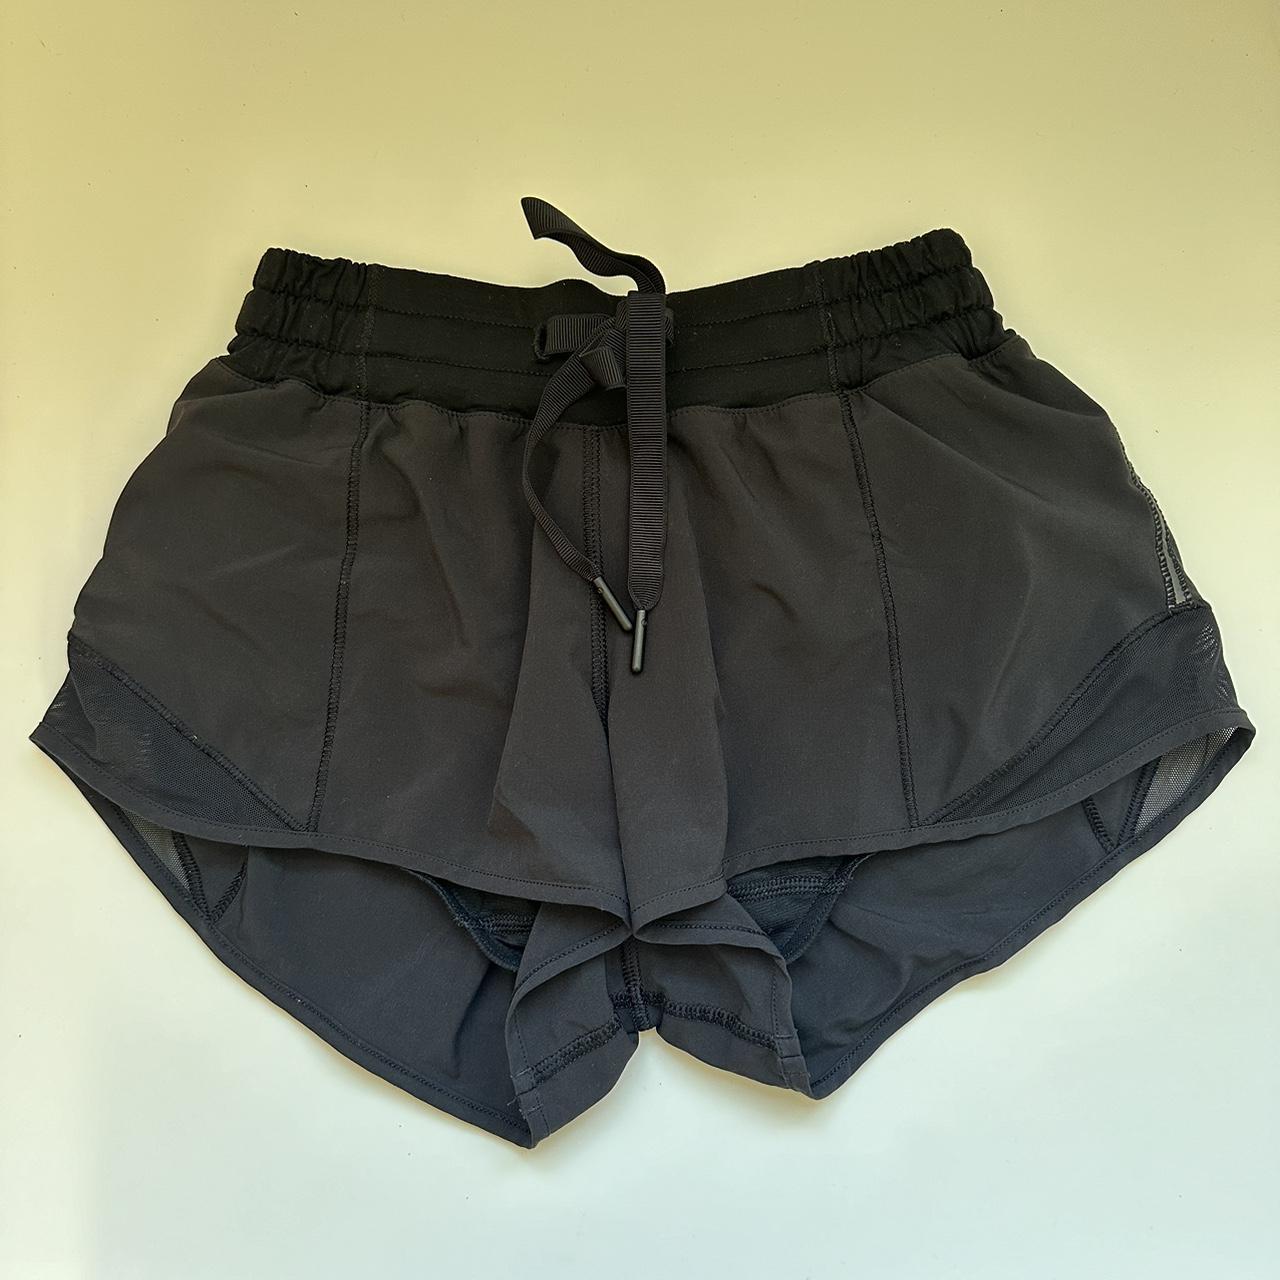 Size 2 Lululemon running shorts in black.... - Depop